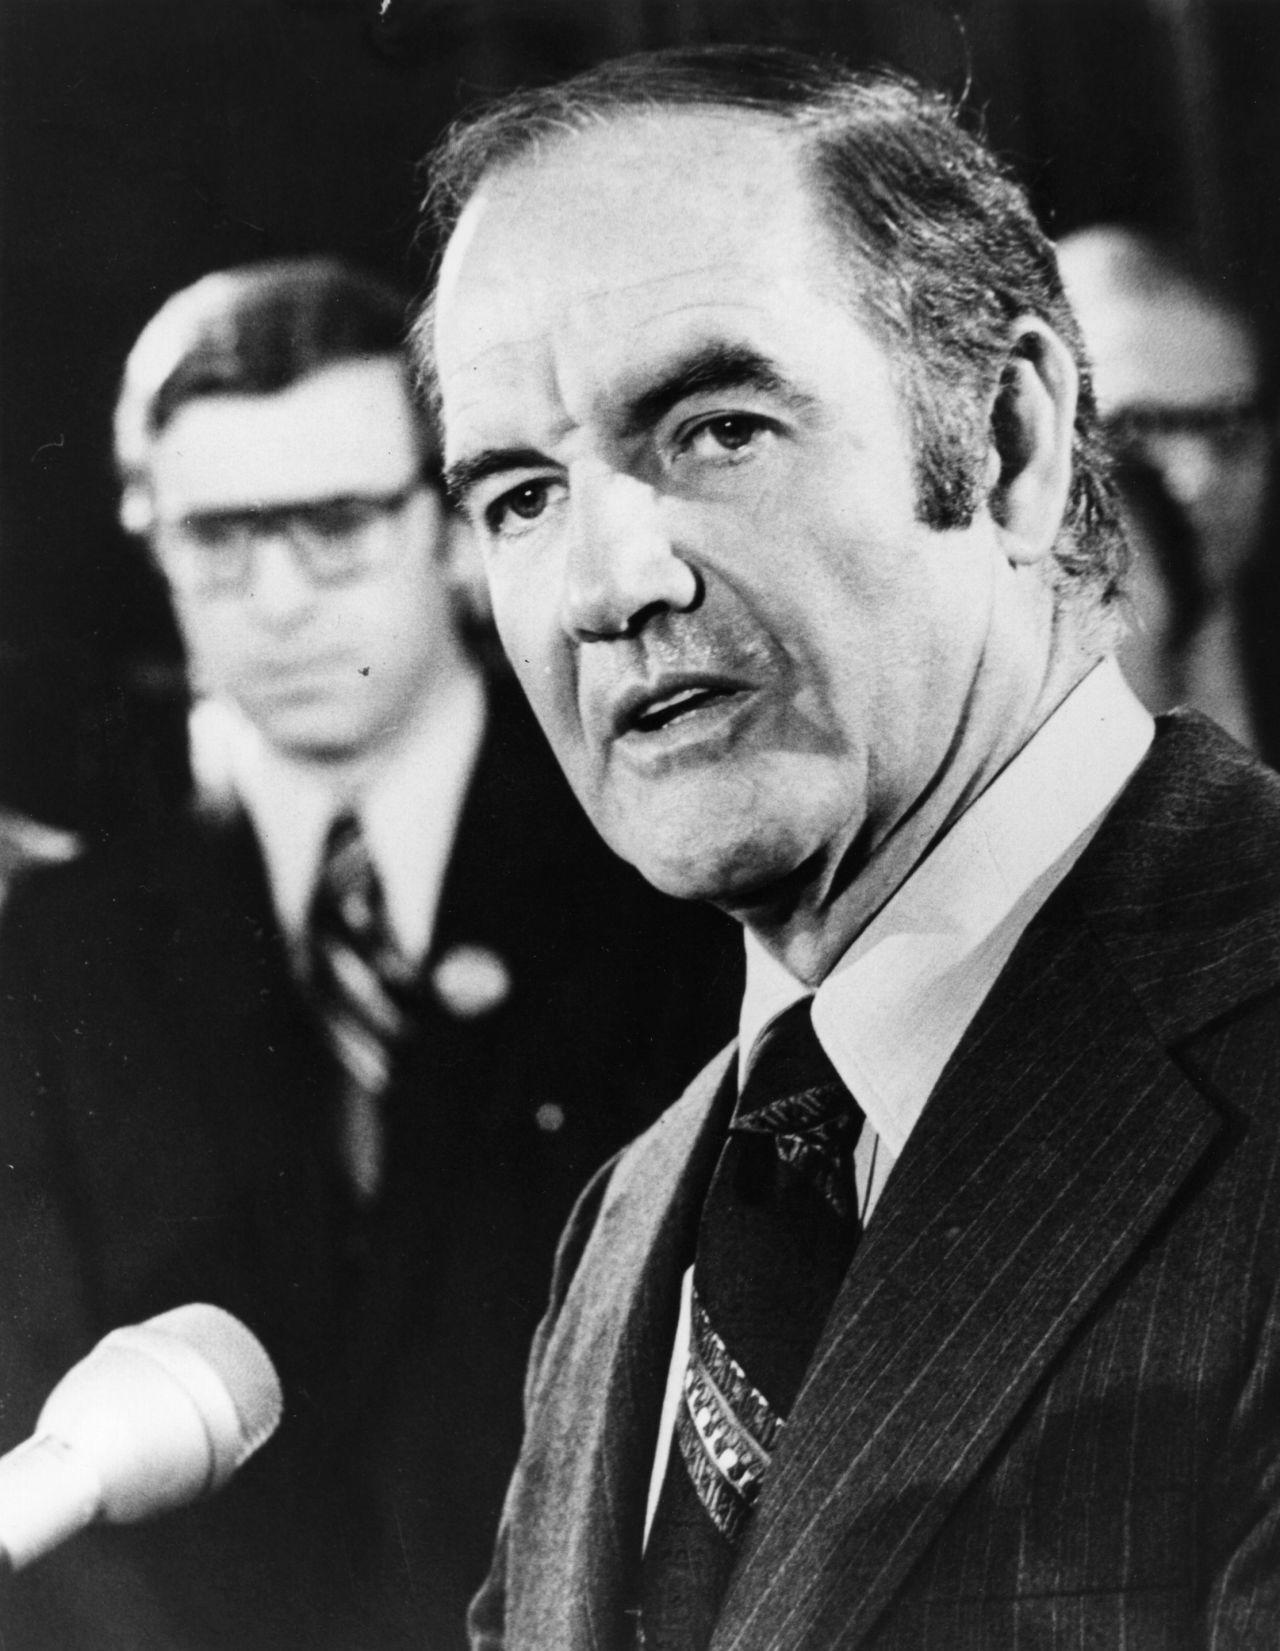 In 1972, George McGovern lost his birth and home state of South Dakota to incumbent Richard Nixon.